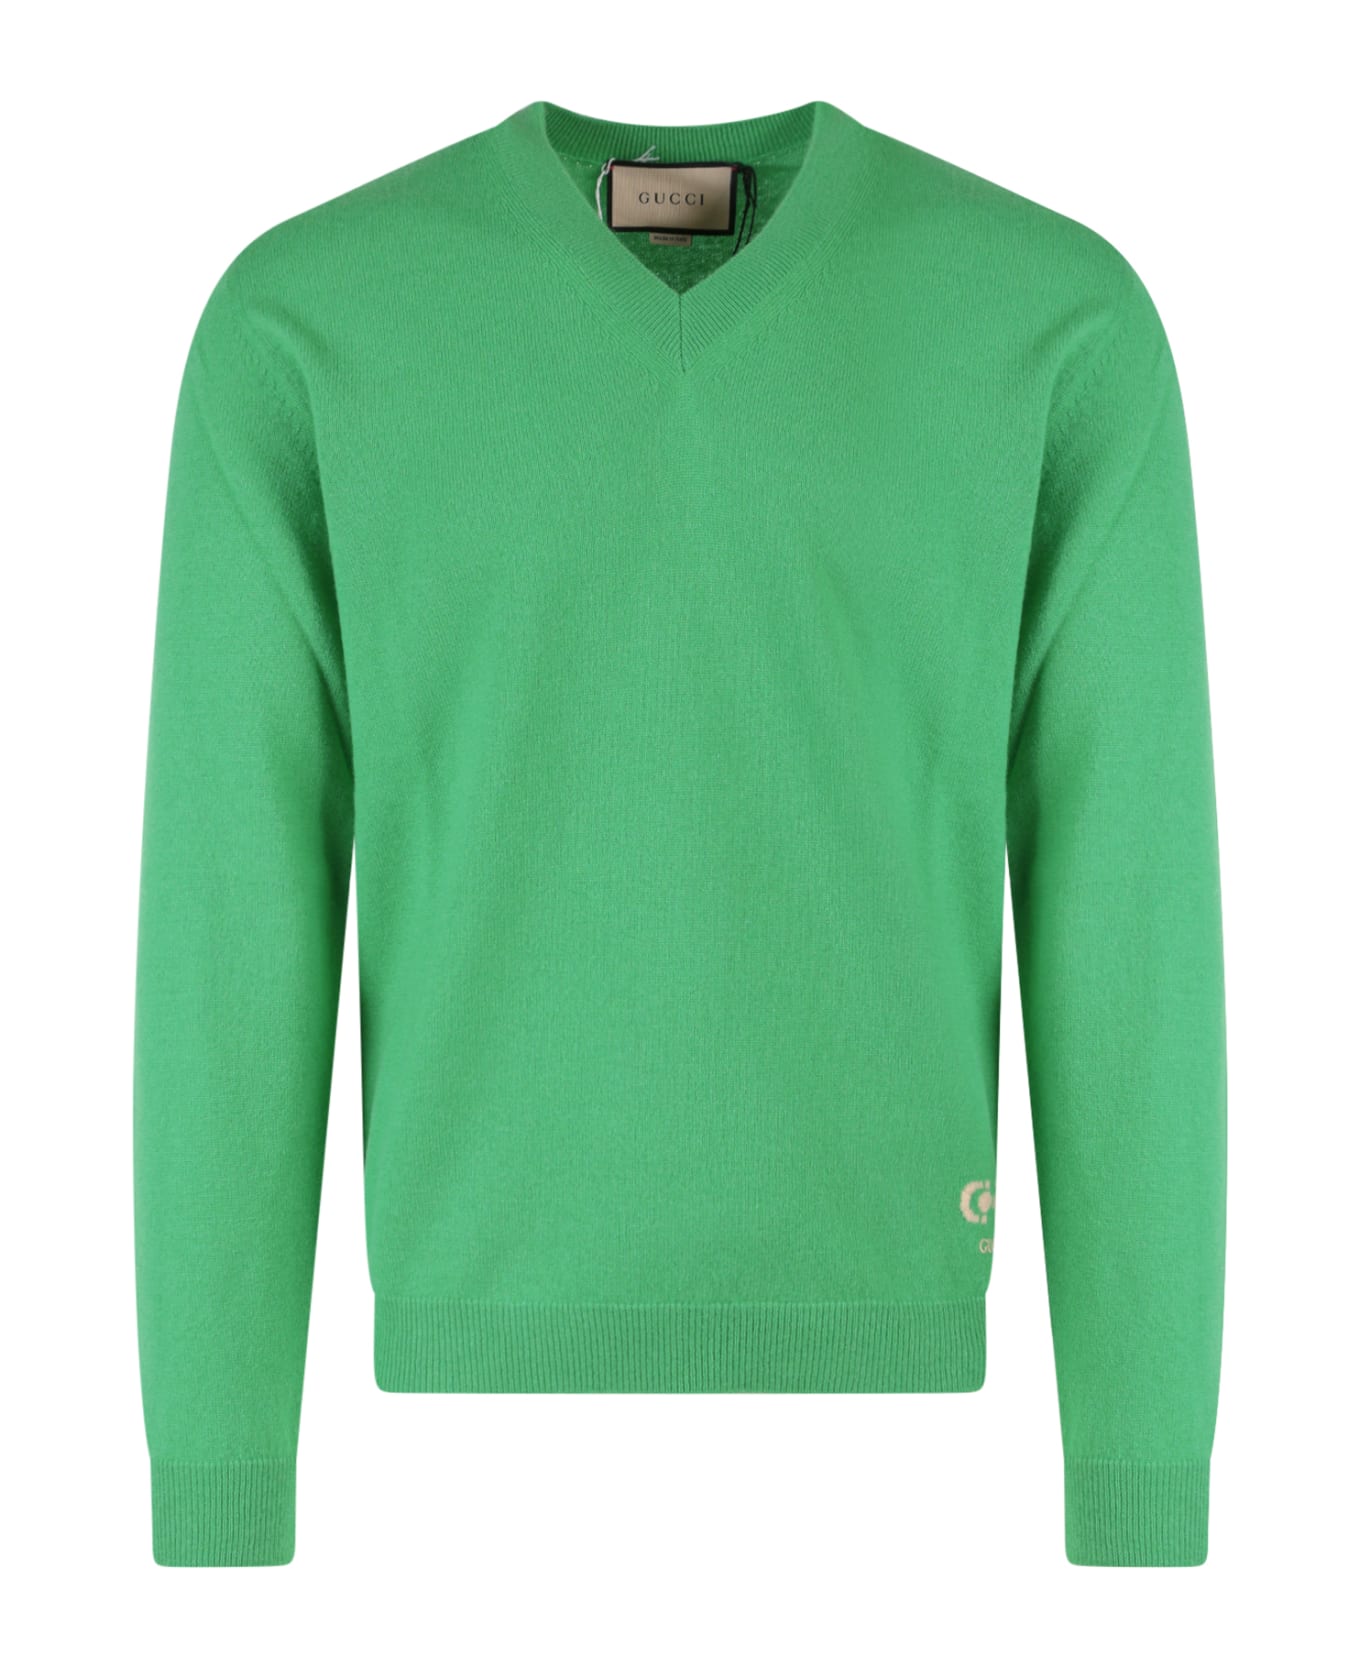 Gucci Sweater - Green ニットウェア